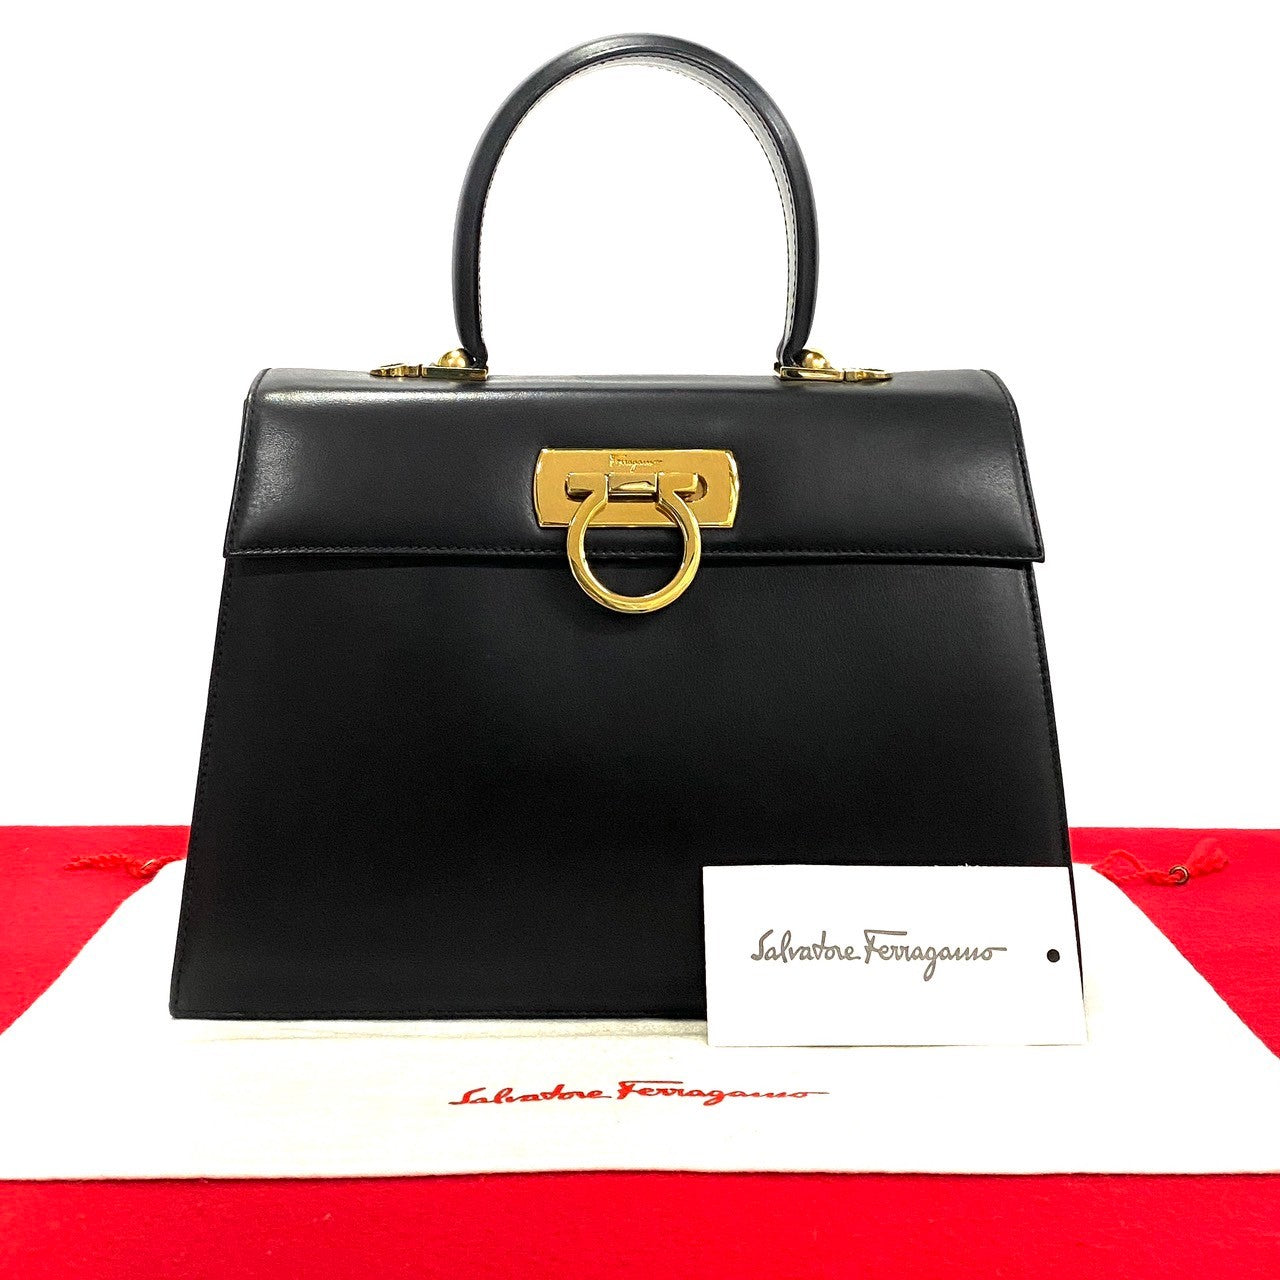 Salvatore Ferragamo Gancini Leather Handbag Leather Handbag in Excellent condition